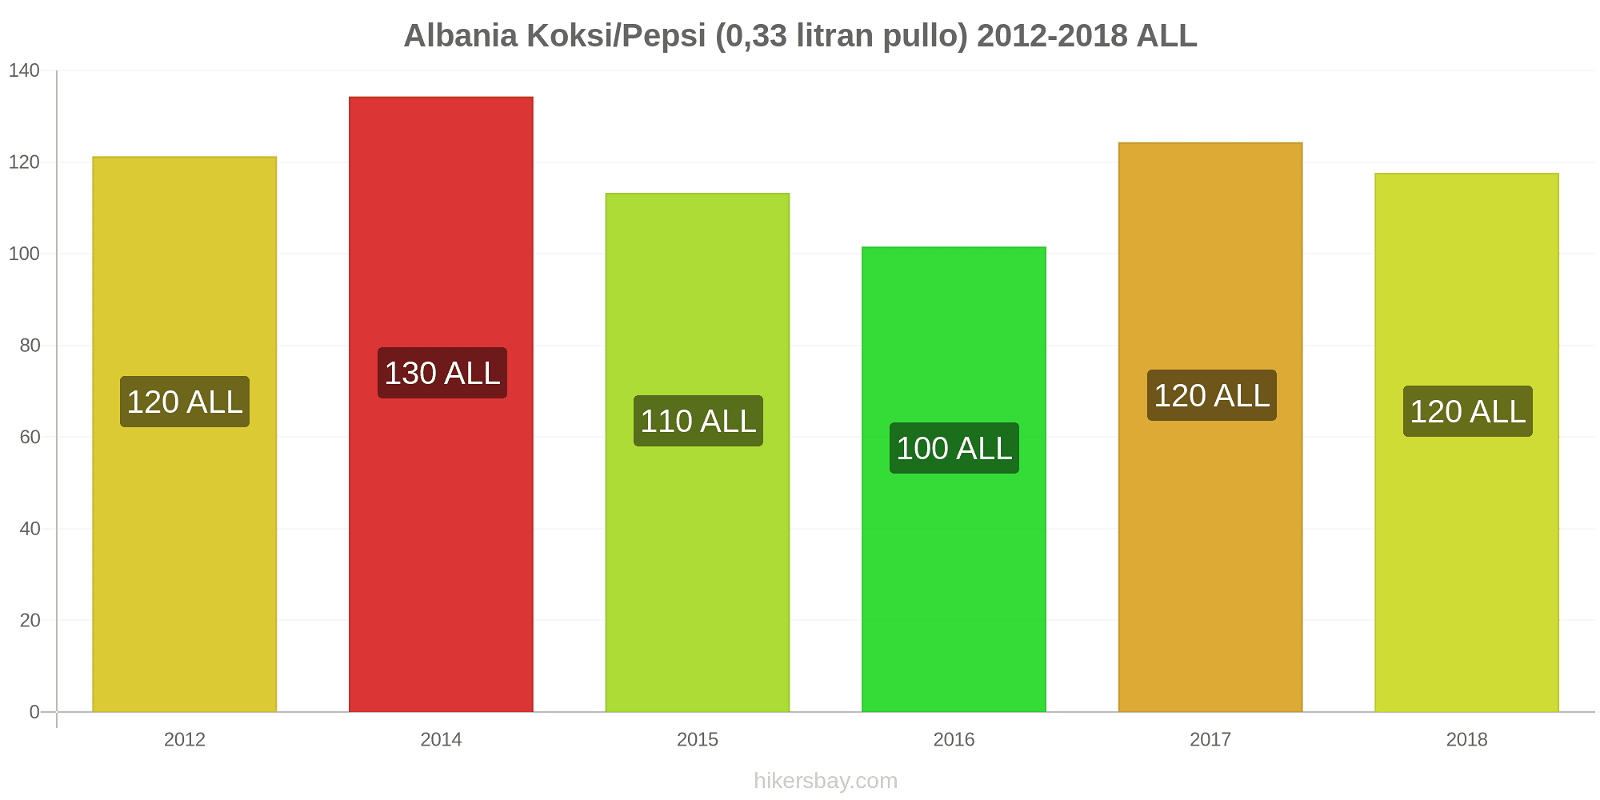 Albania hintojen muutokset Koksi/Pepsi (0,33 litran pullo) hikersbay.com